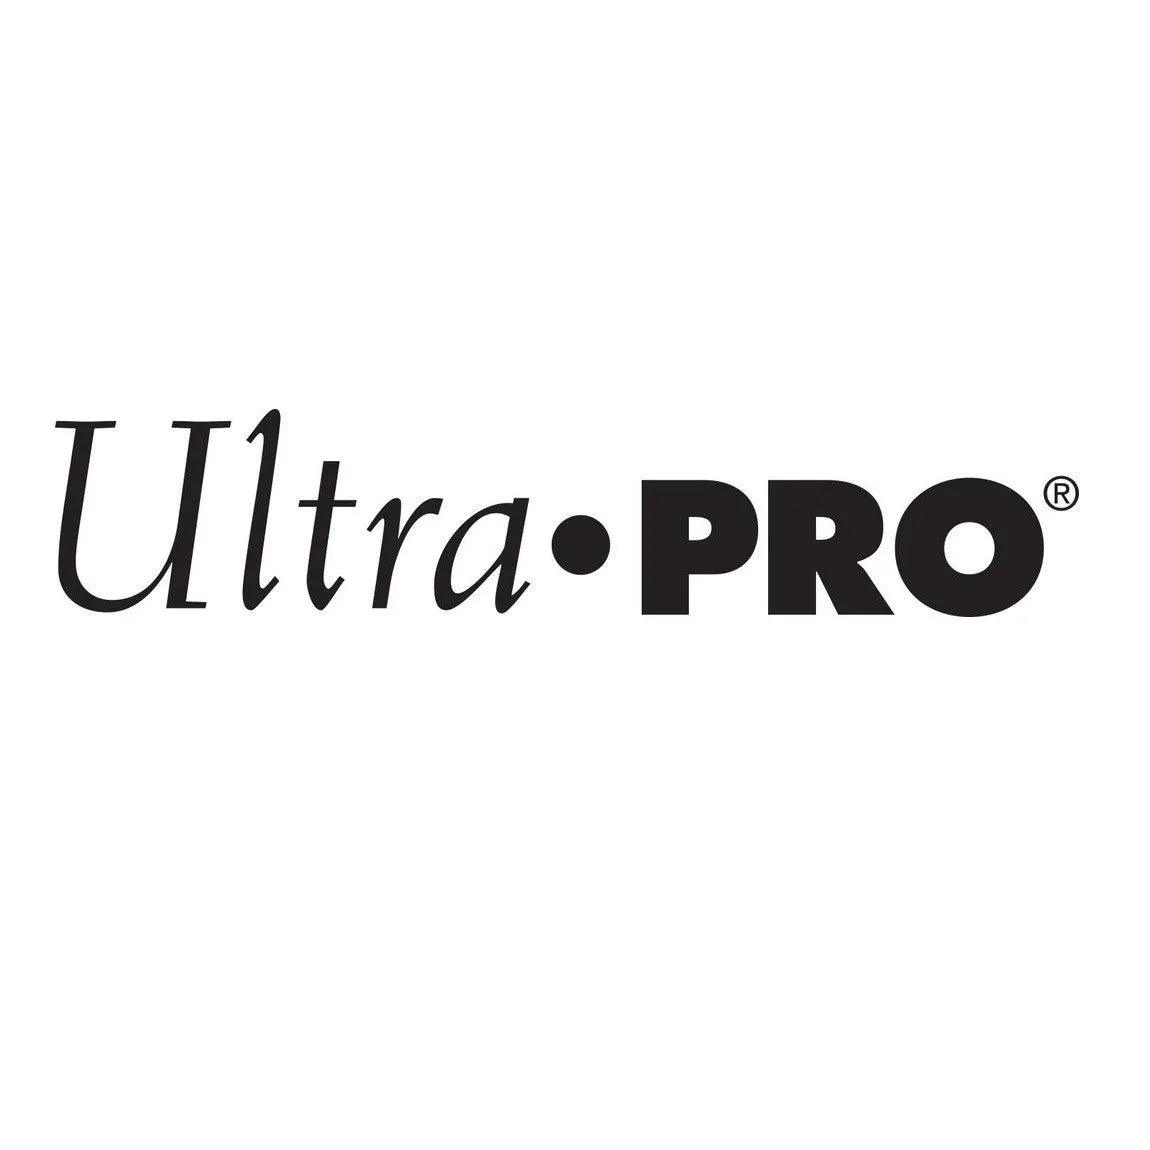 Ultra PRO - Album/Binder/Portfolio 4-Pocket (Holds 80 cards + 4 Oversize cards) - Pokemon - Pikachu - Hobby Champion Inc